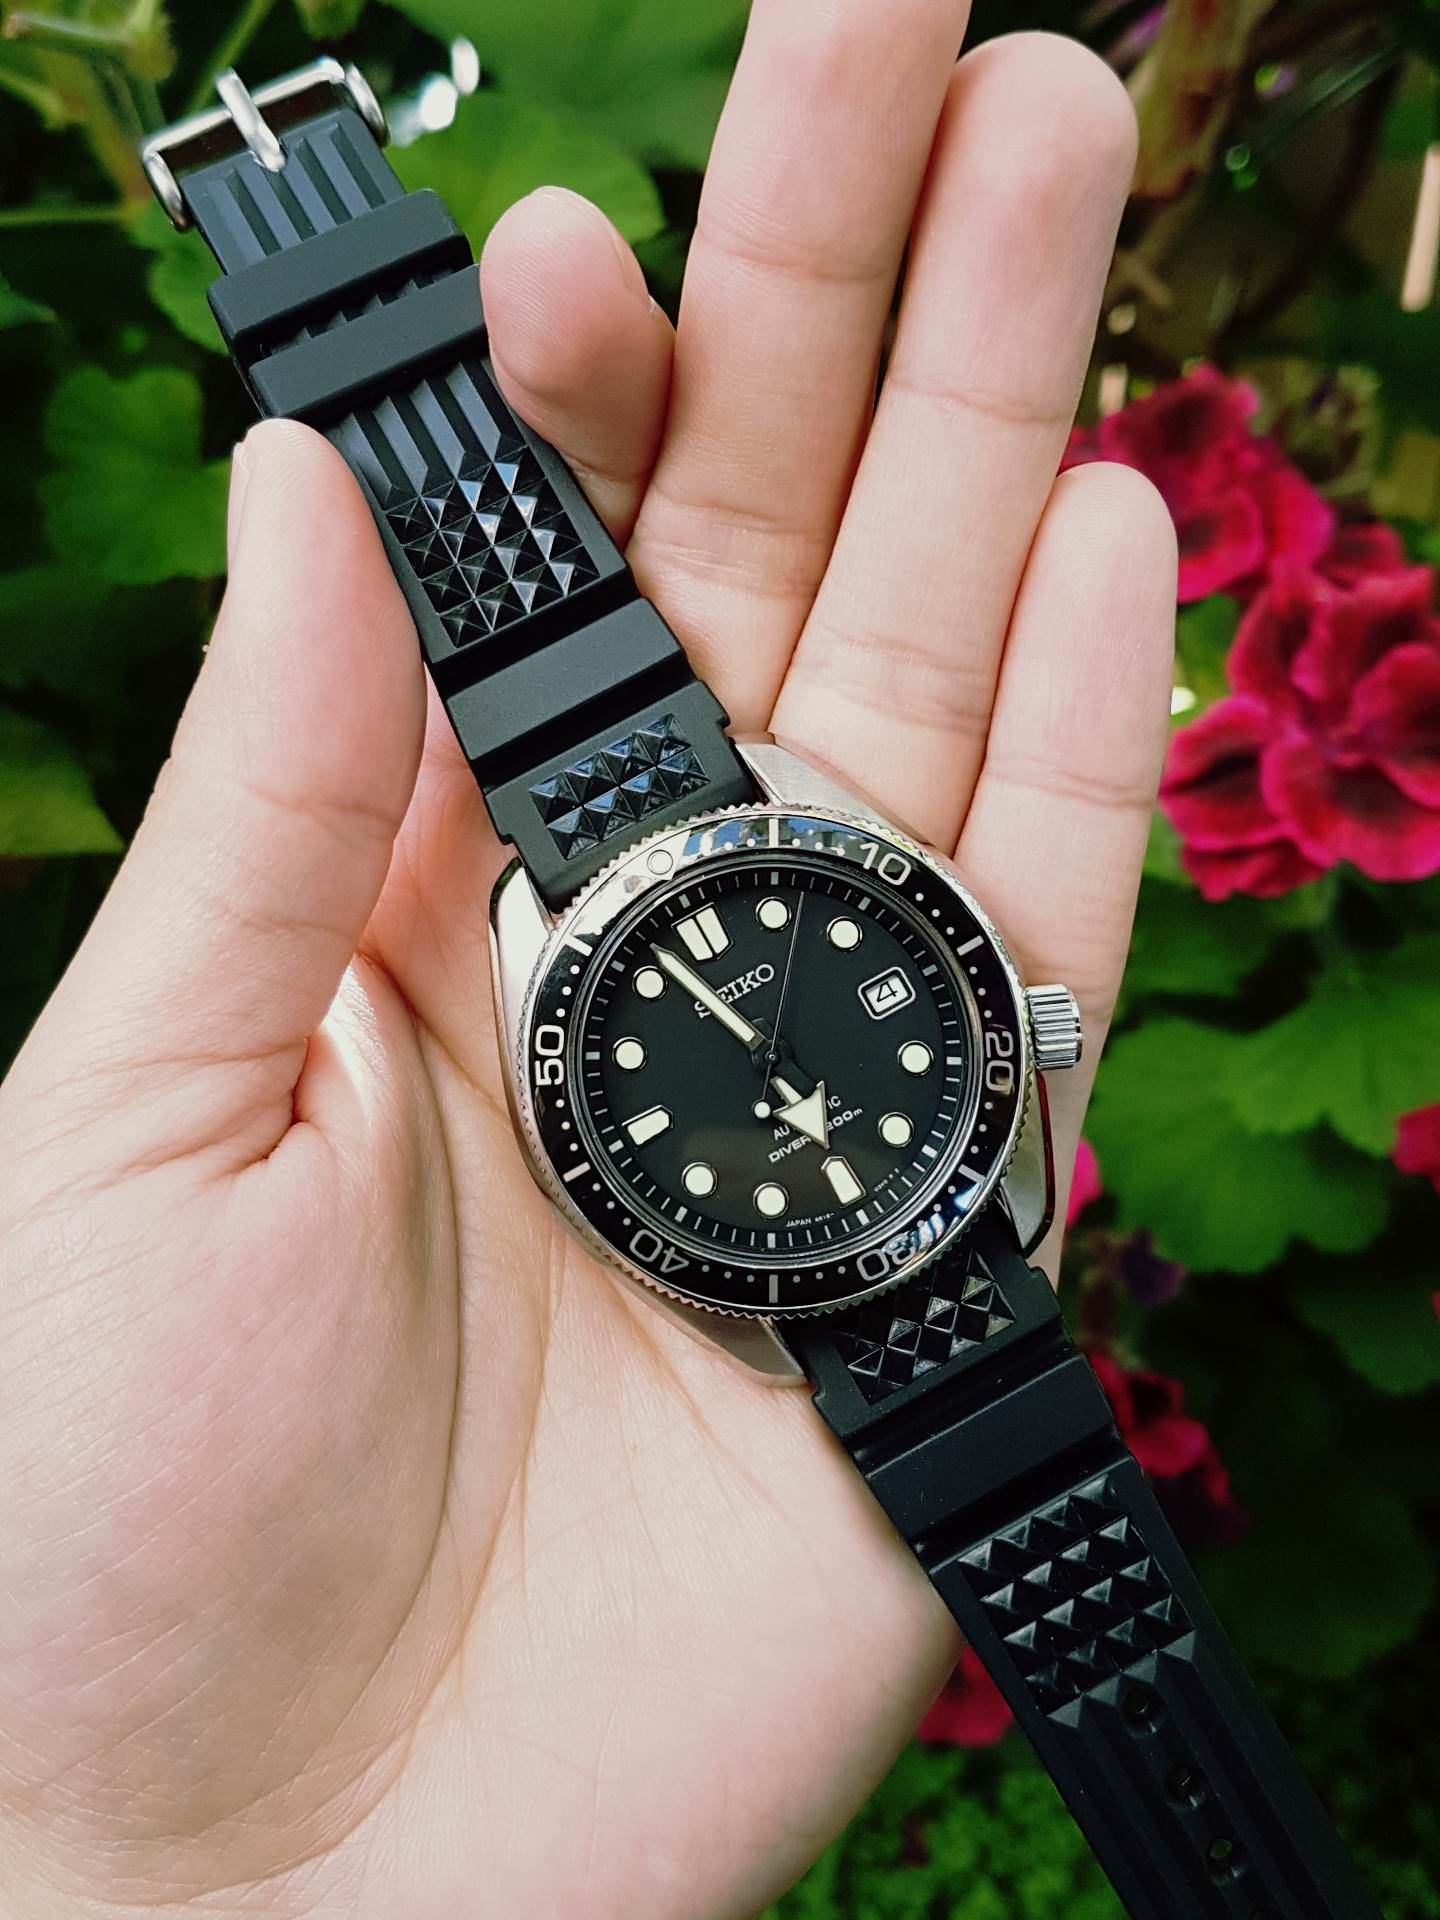 Wts Seiko Sbdc061 Marinemaster 0 Brand New Reduced Watchcharts